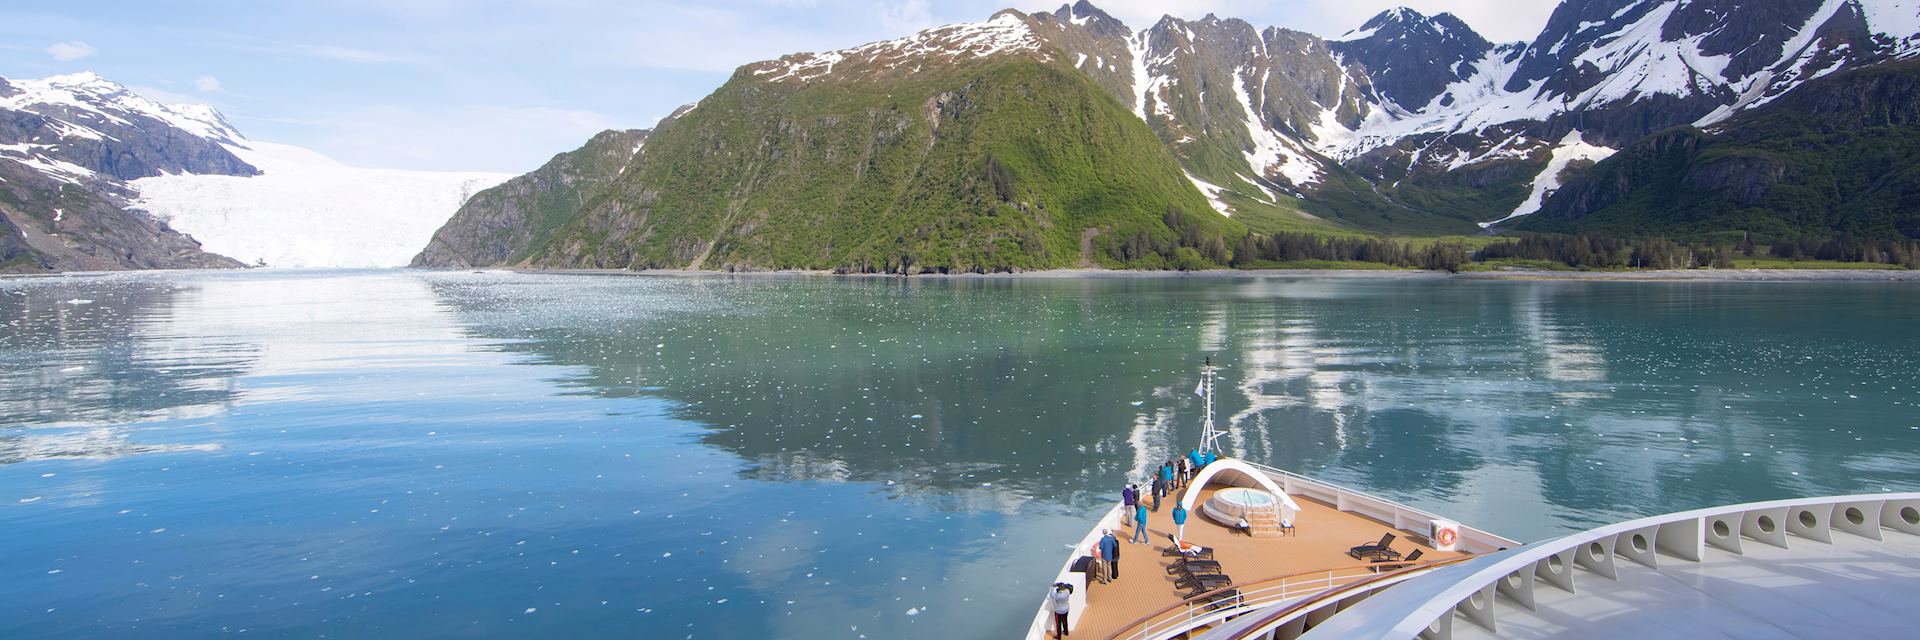 Seabourn cruise in Alaska